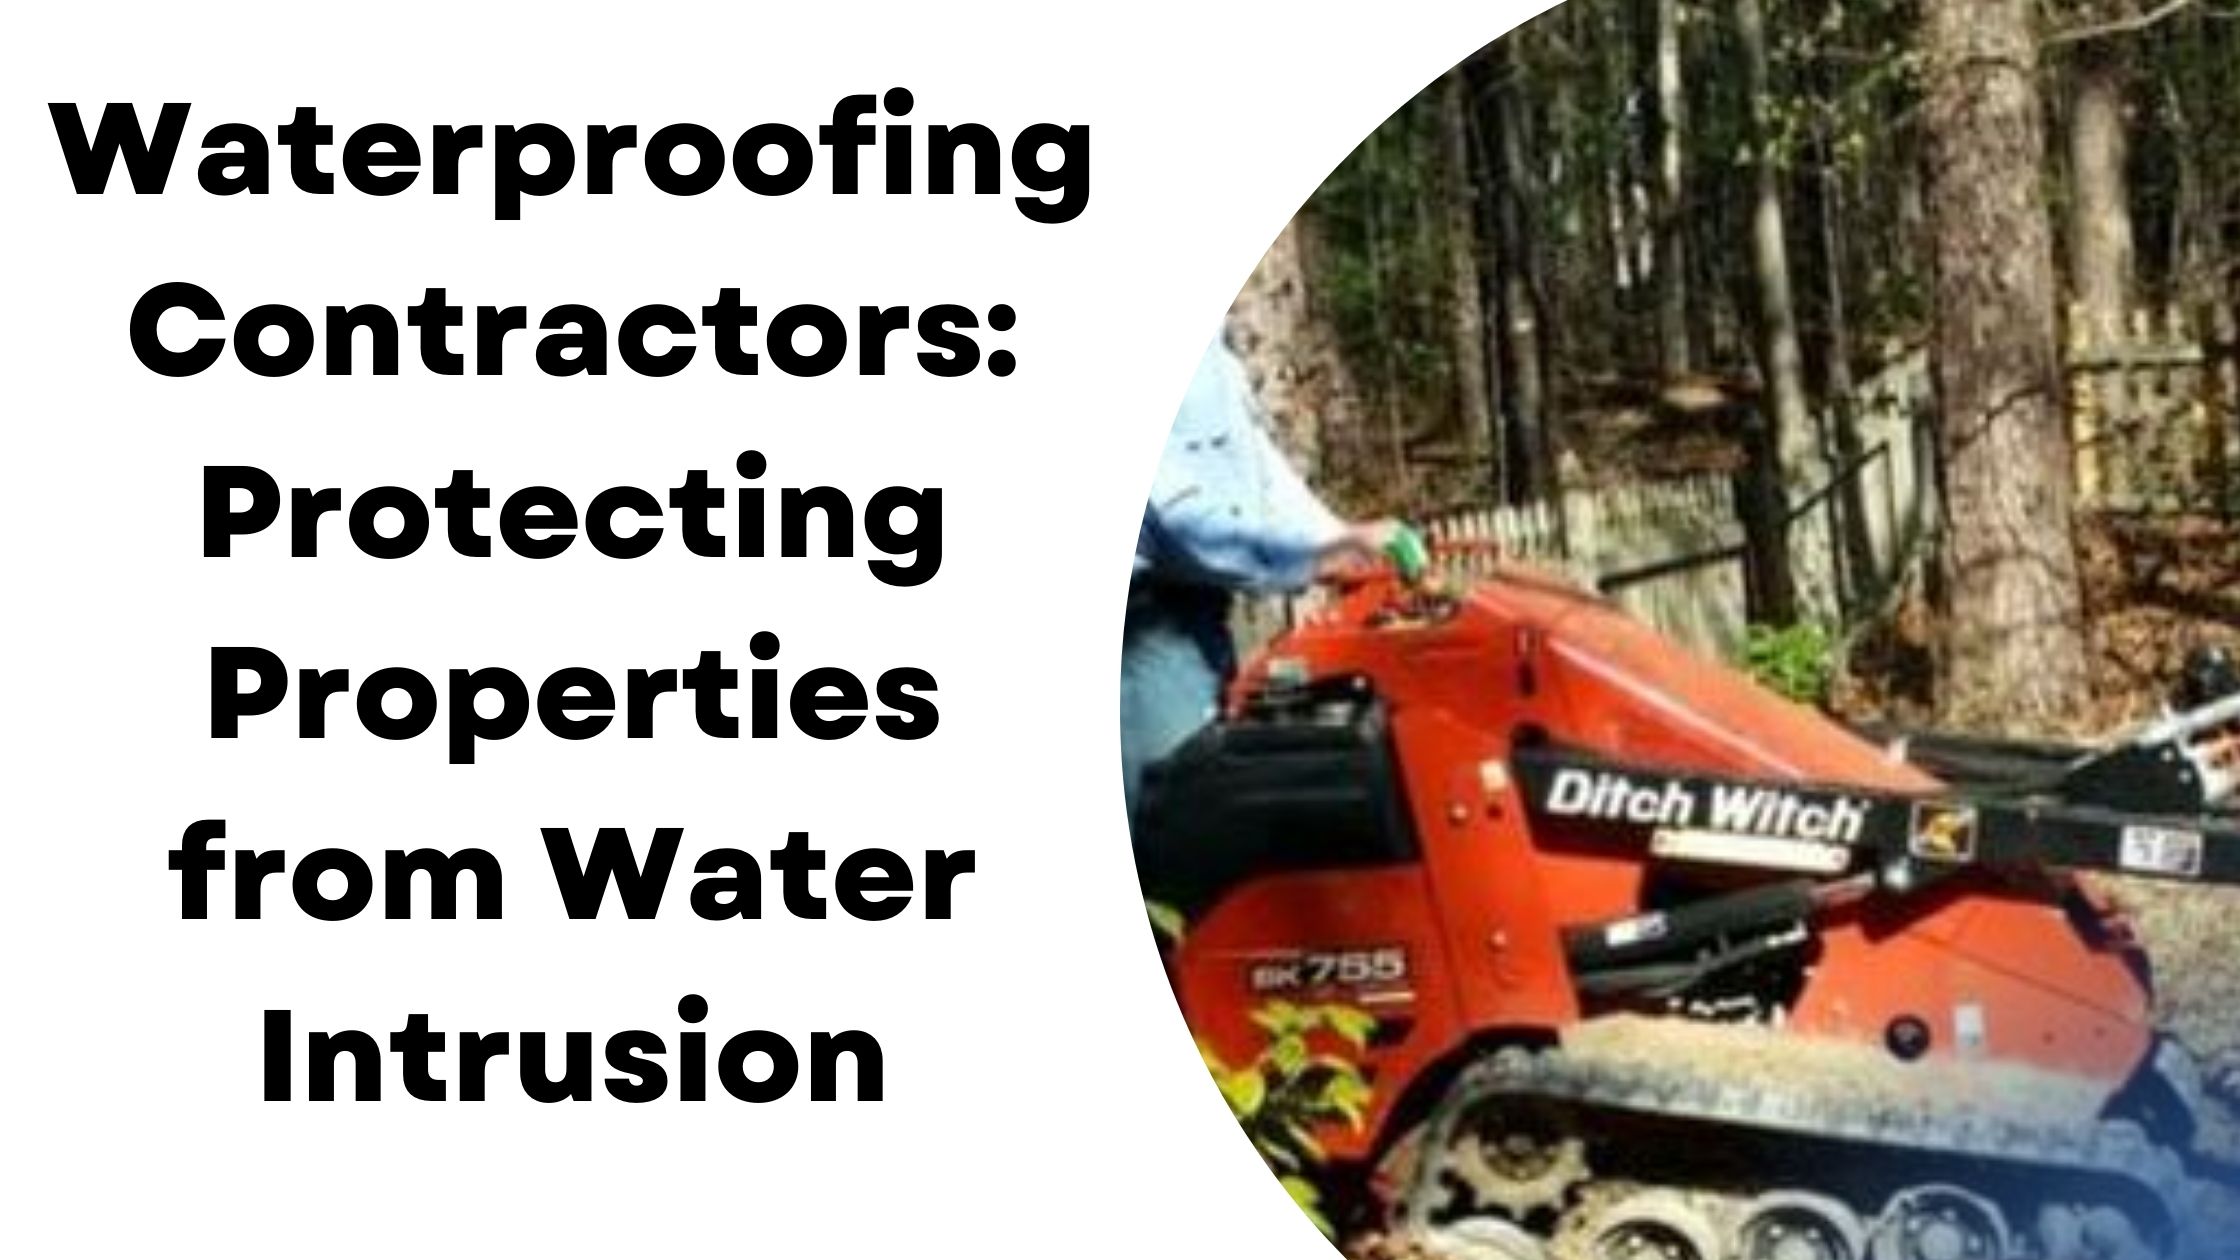 Waterproofing Contractors Protecting Properties from Water Intrusion